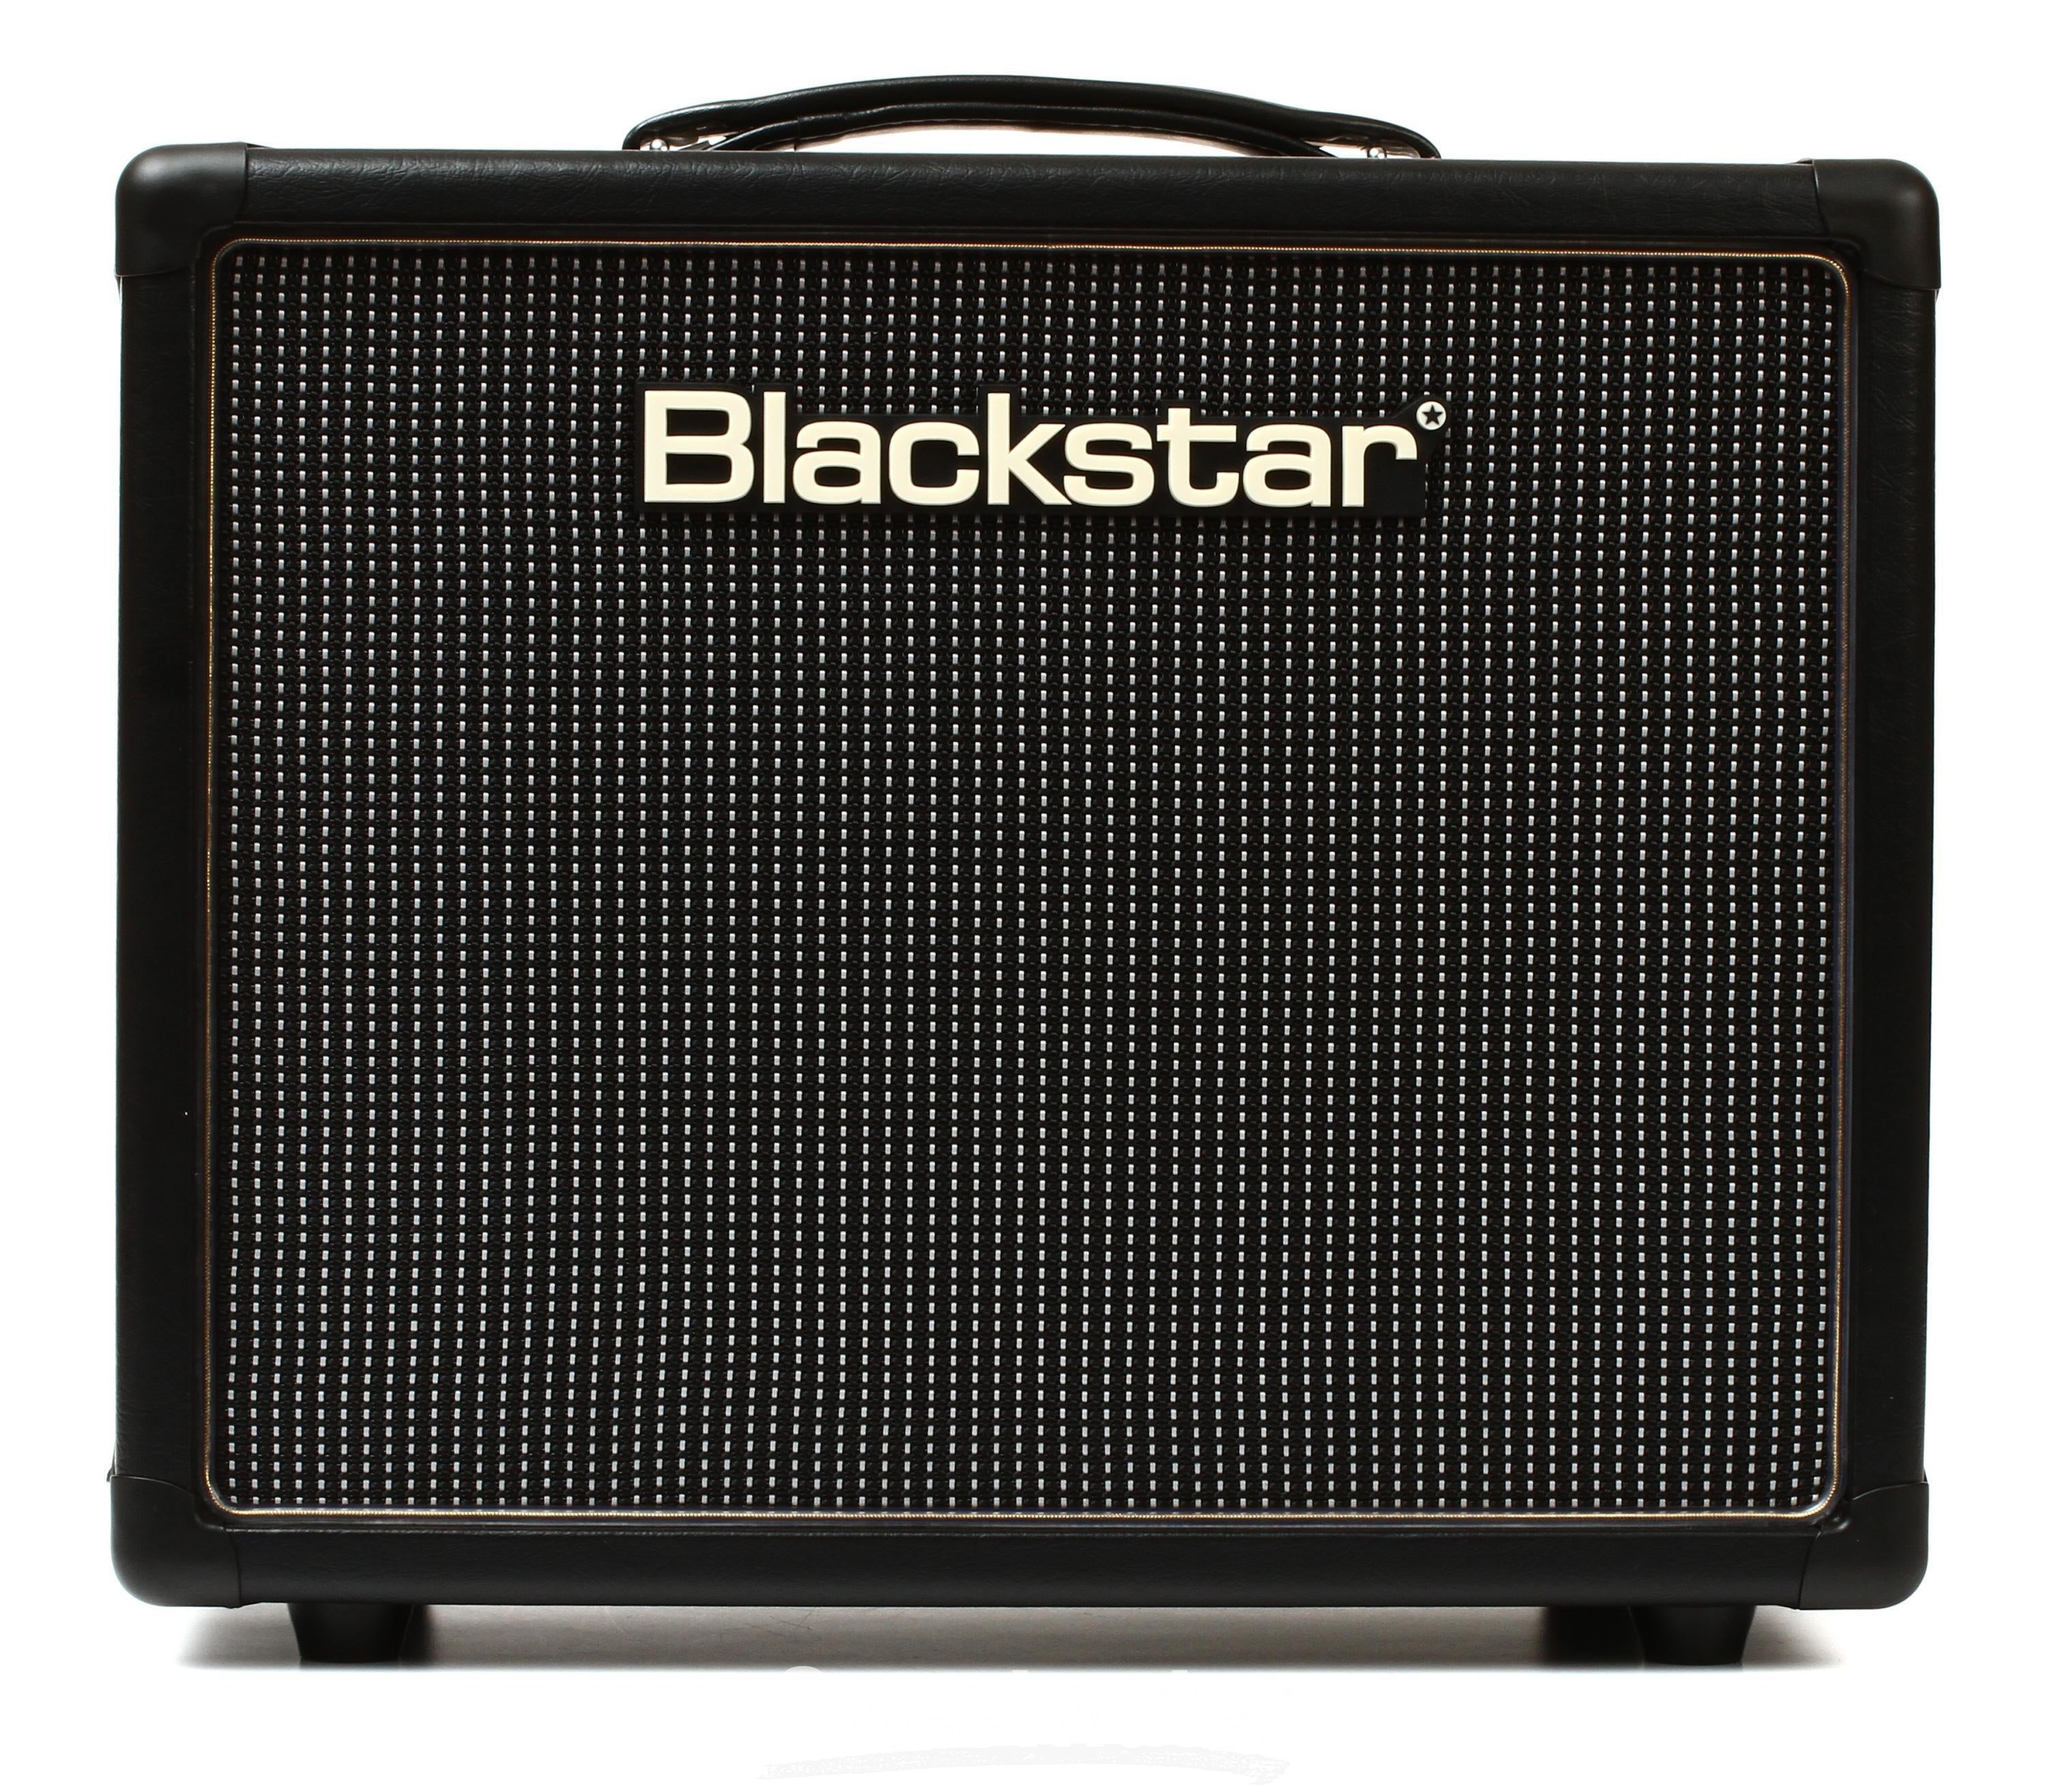 Blackstar HT-5R 1x12 inch 5-watt Tube Combo with Reverb Reviews